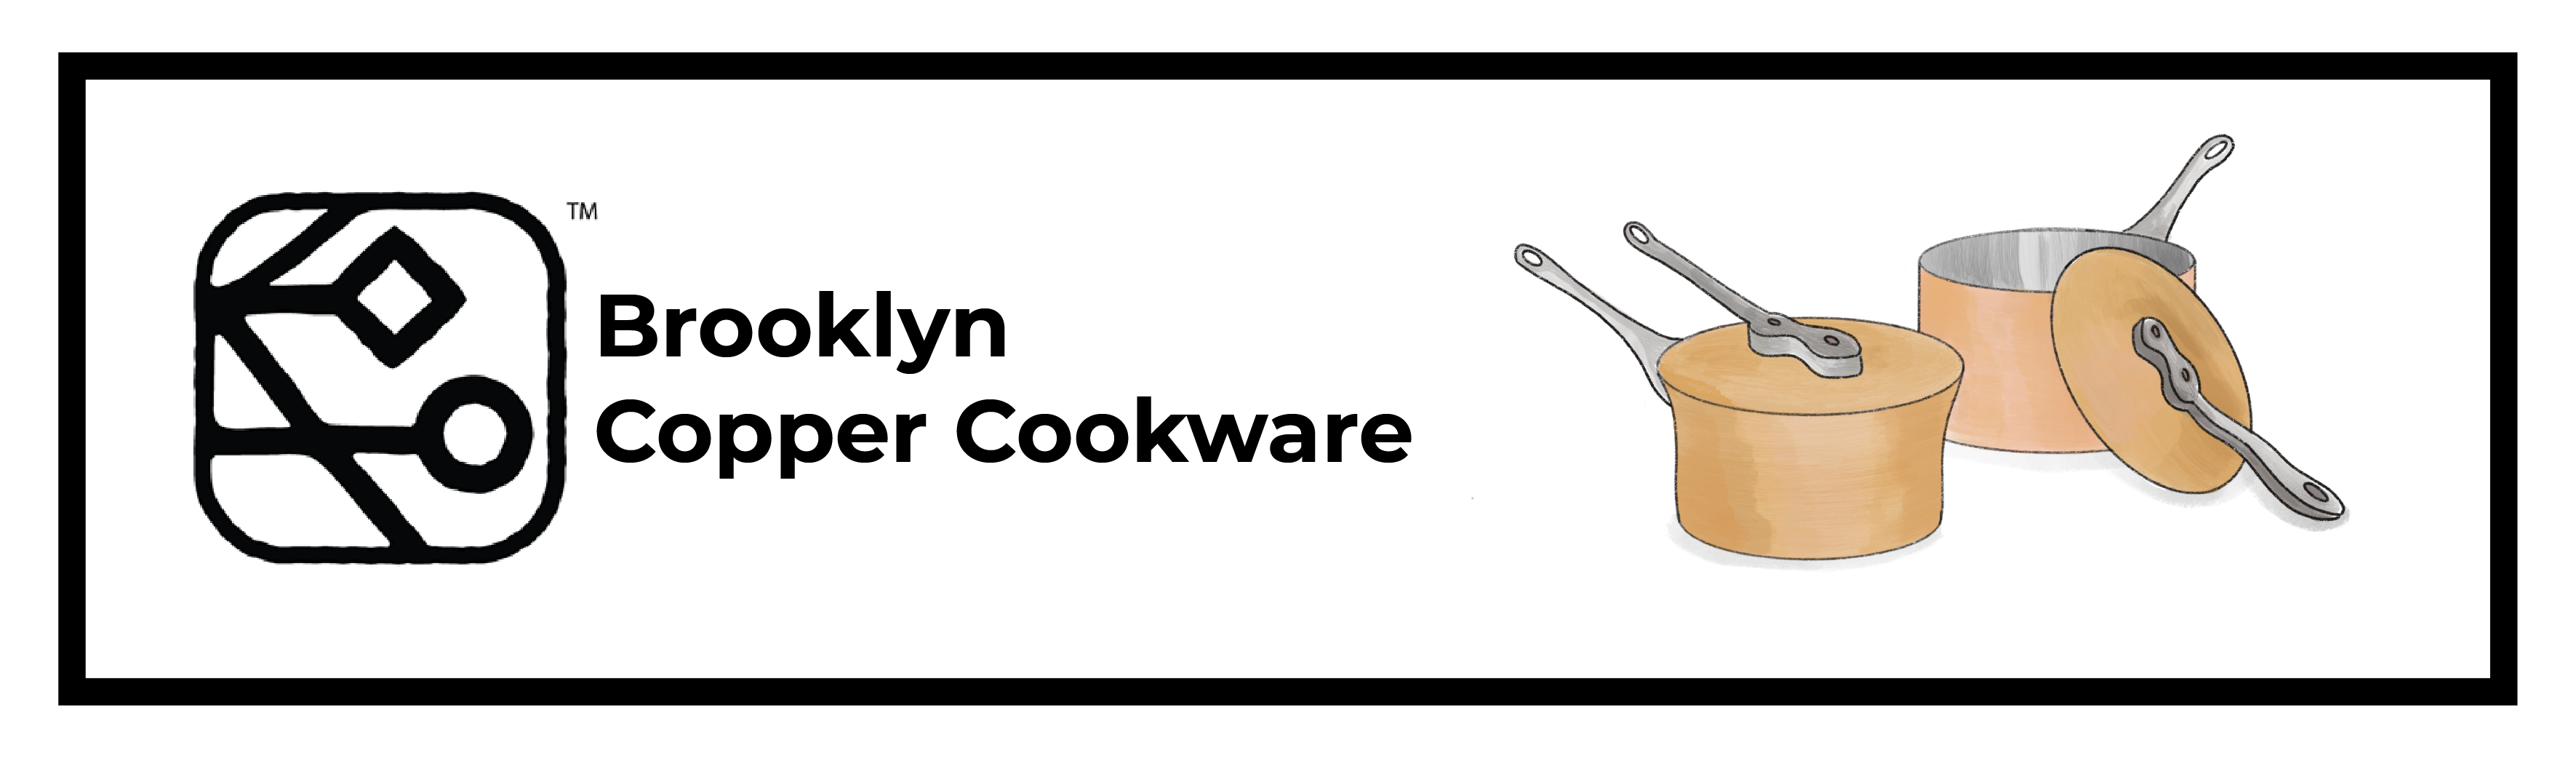 Brooklyn Copper Cookware Brand